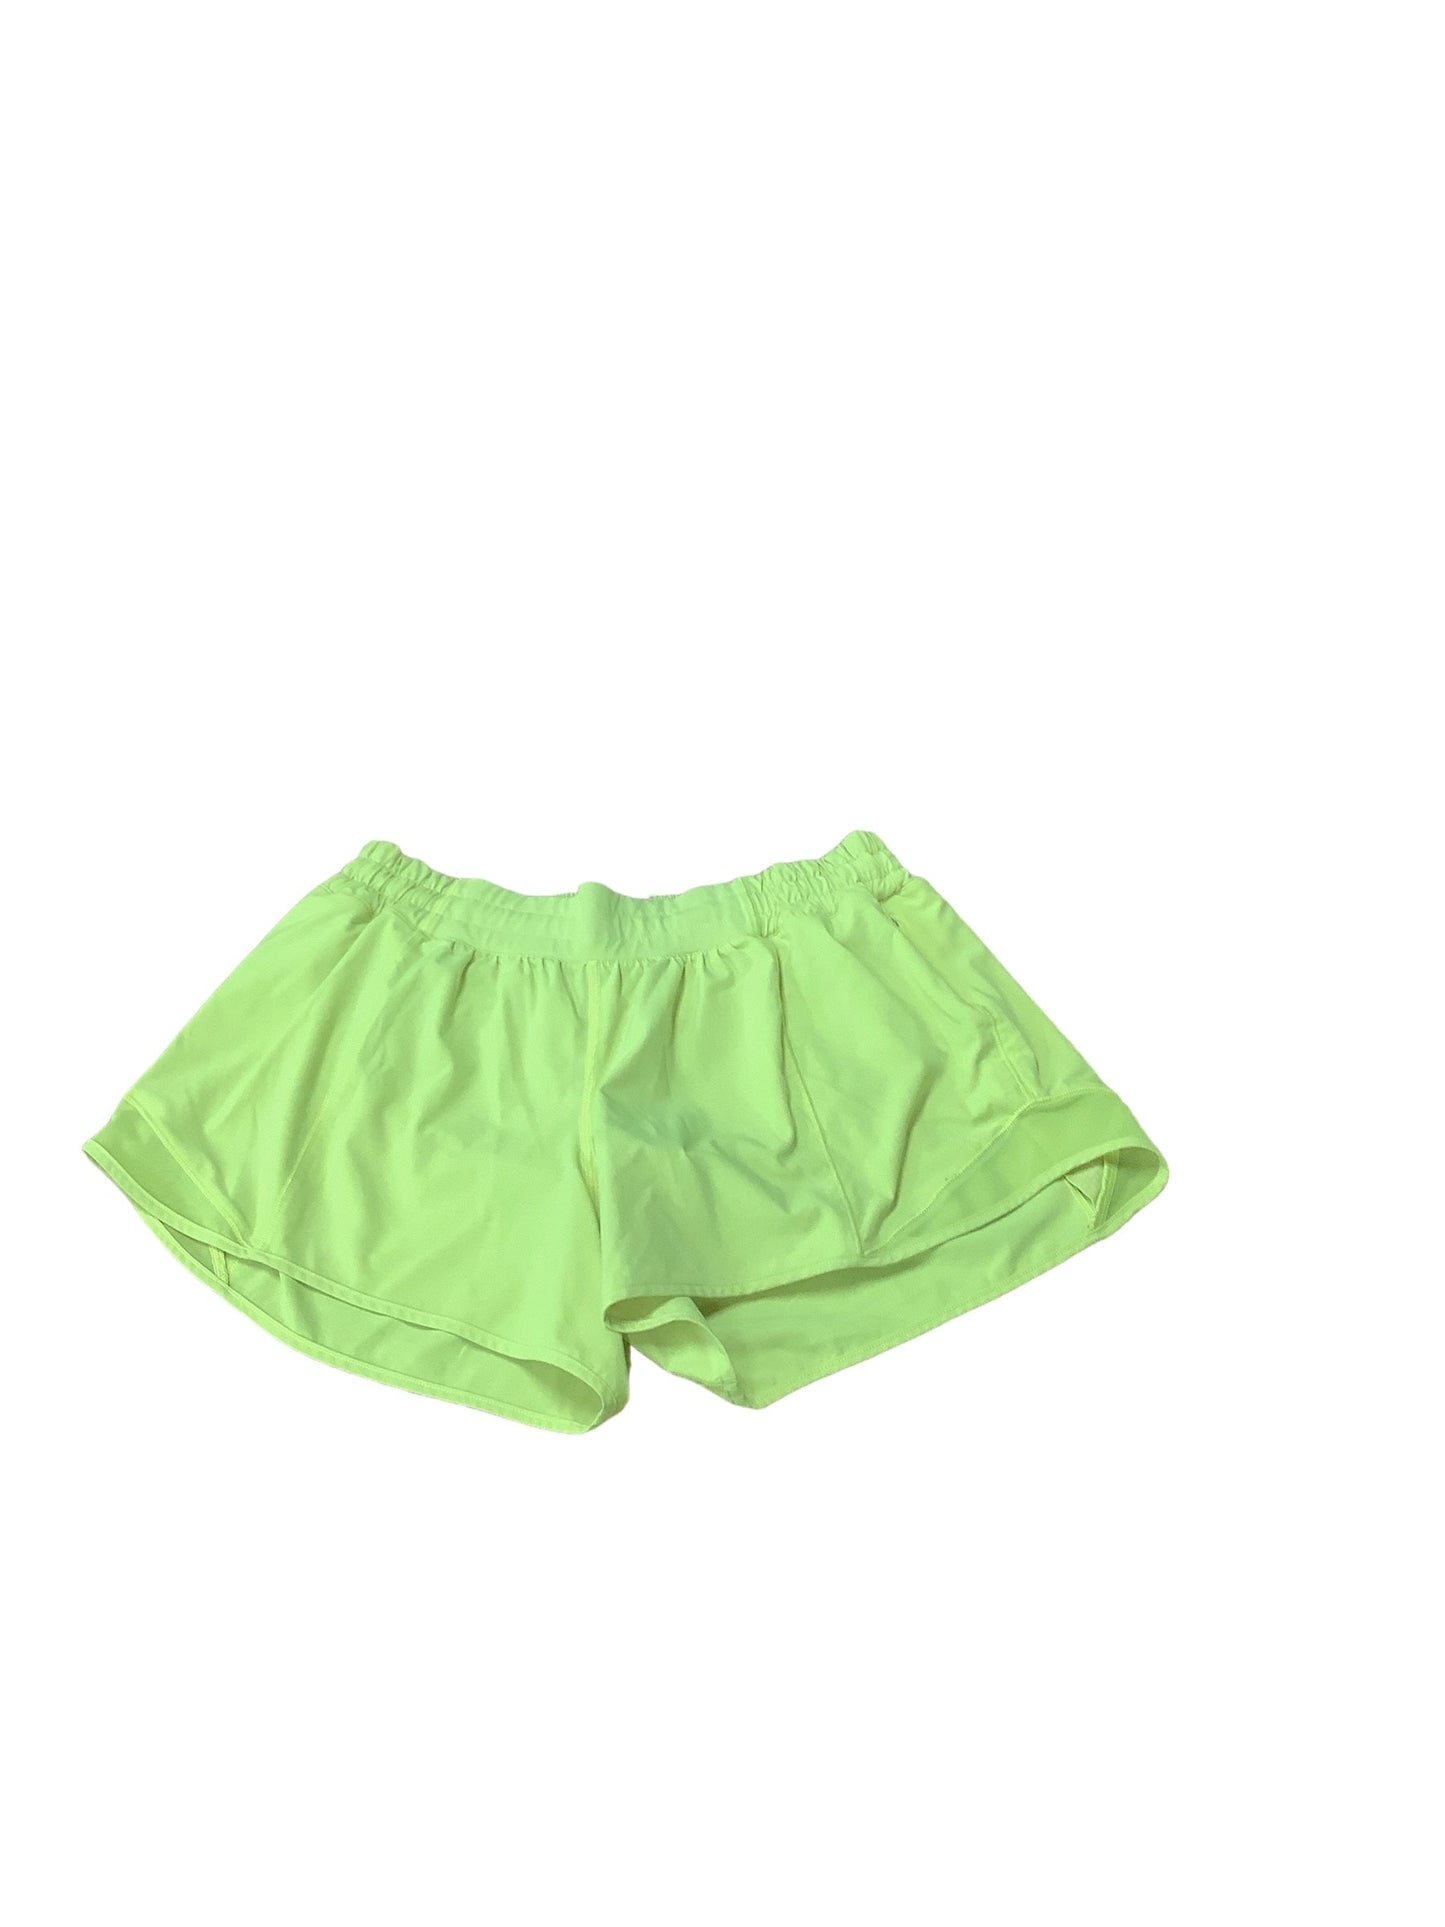 Green Athletic Shorts Lululemon, Size 12tall